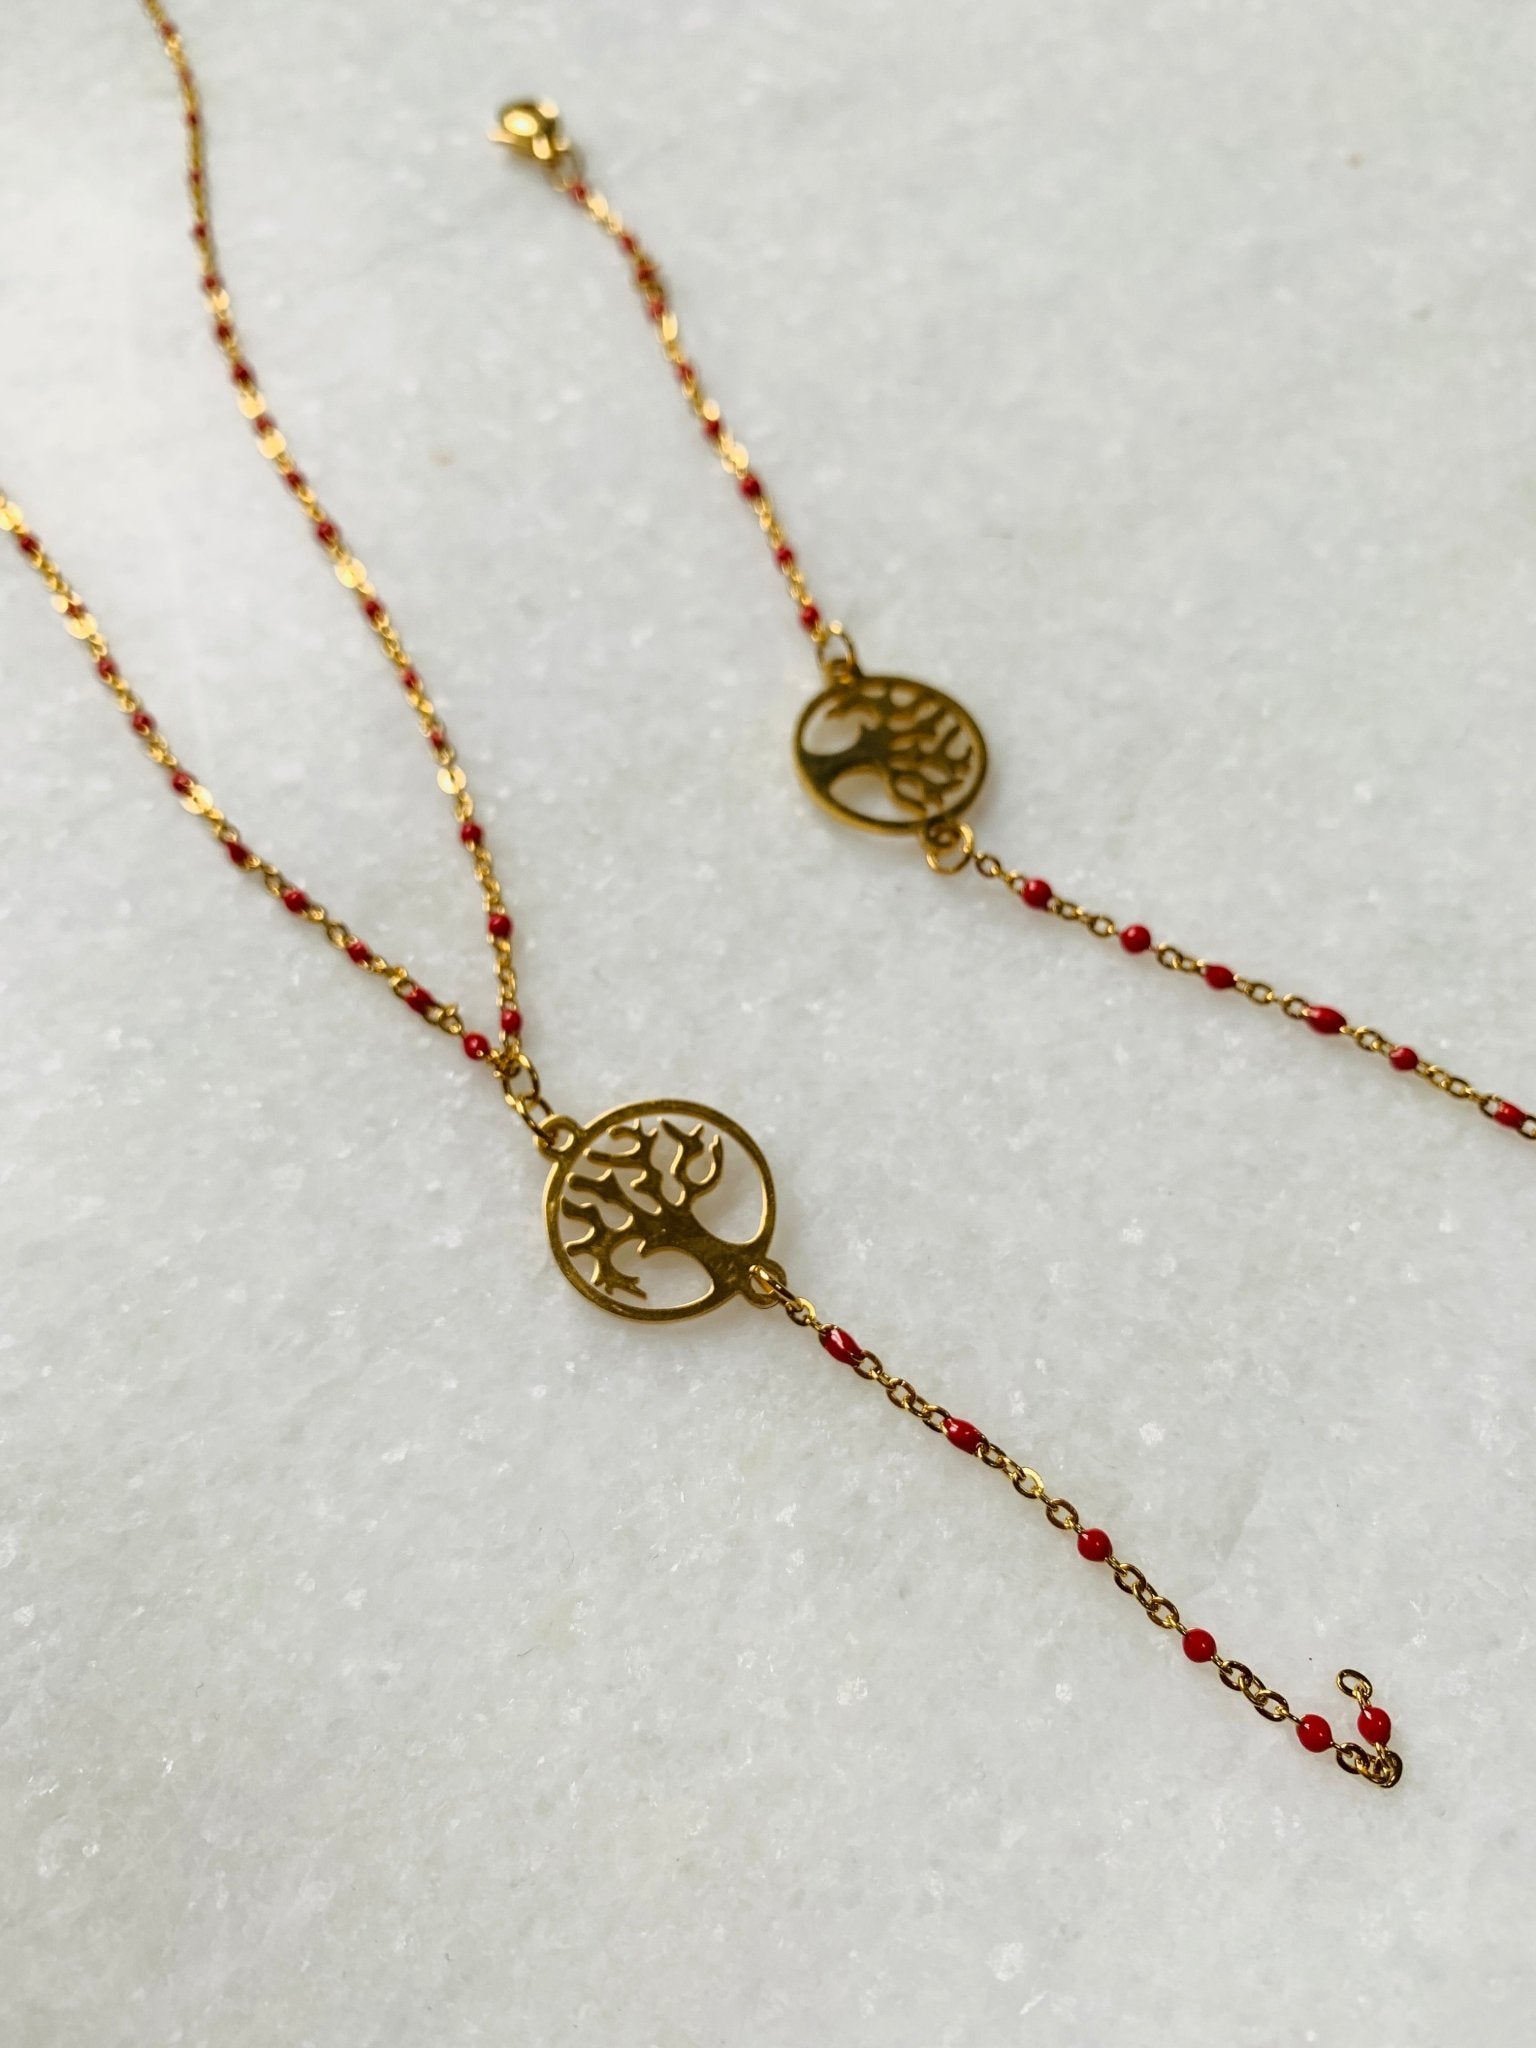 Mulberry tree gold and necklace / bracelet - Natalia Willmott